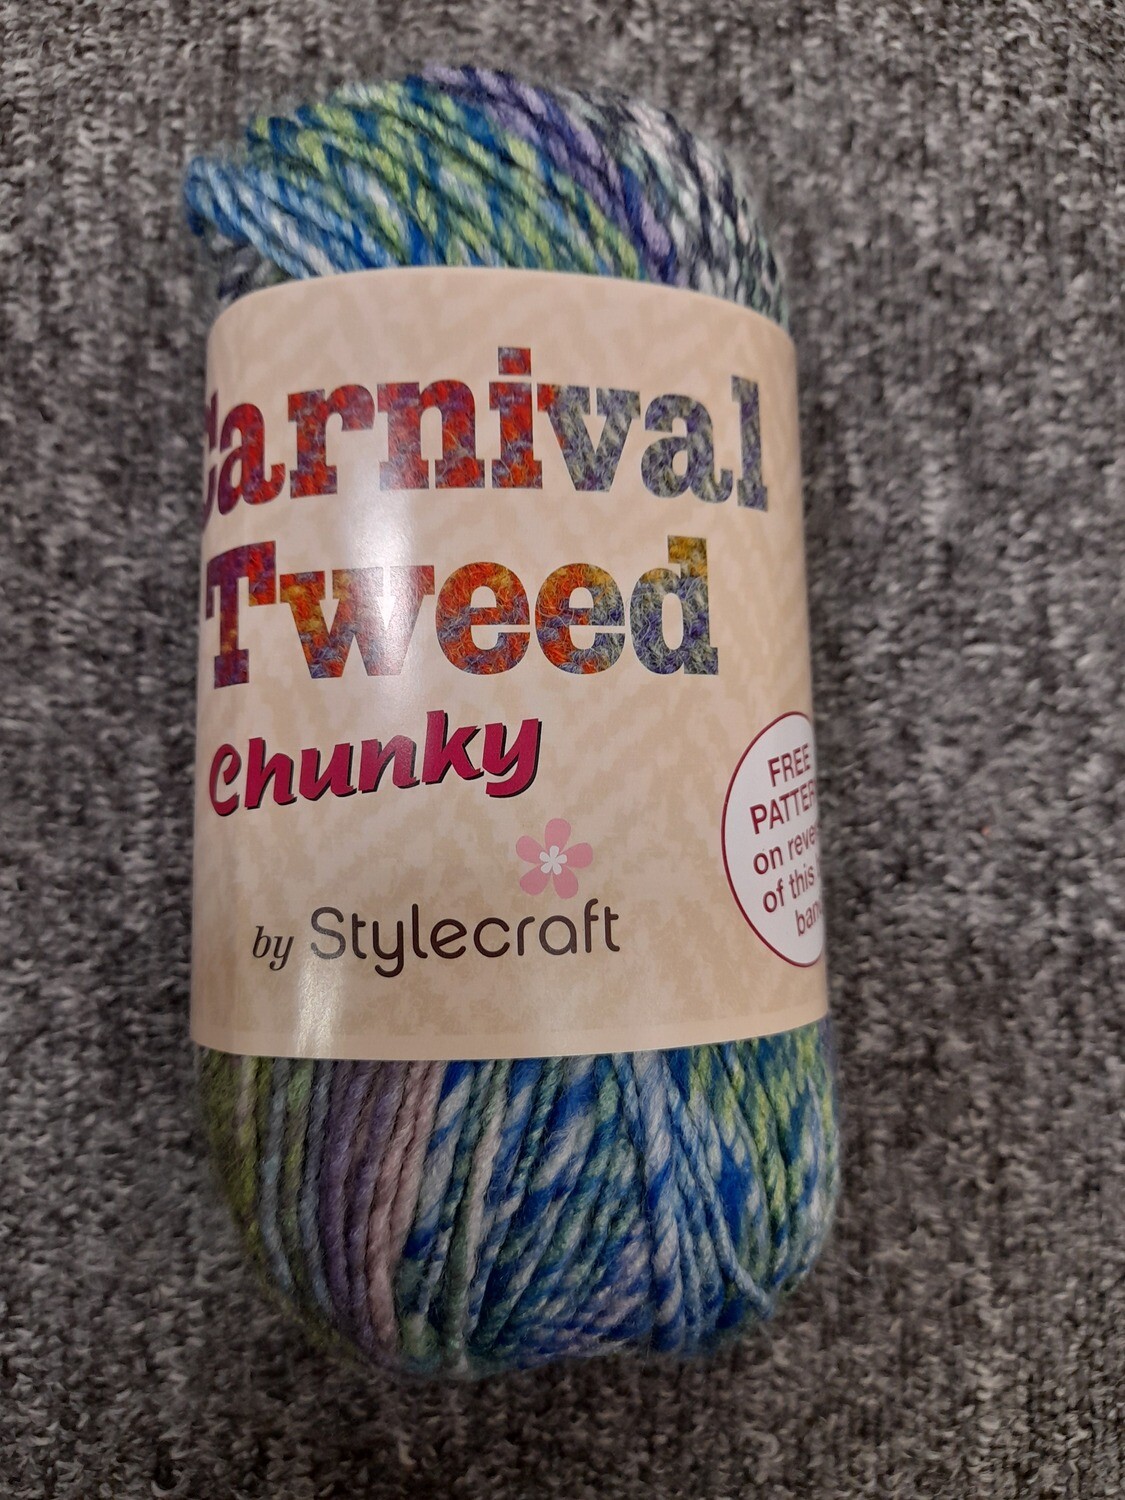 Stylecraft Carnival Tweed Chunky